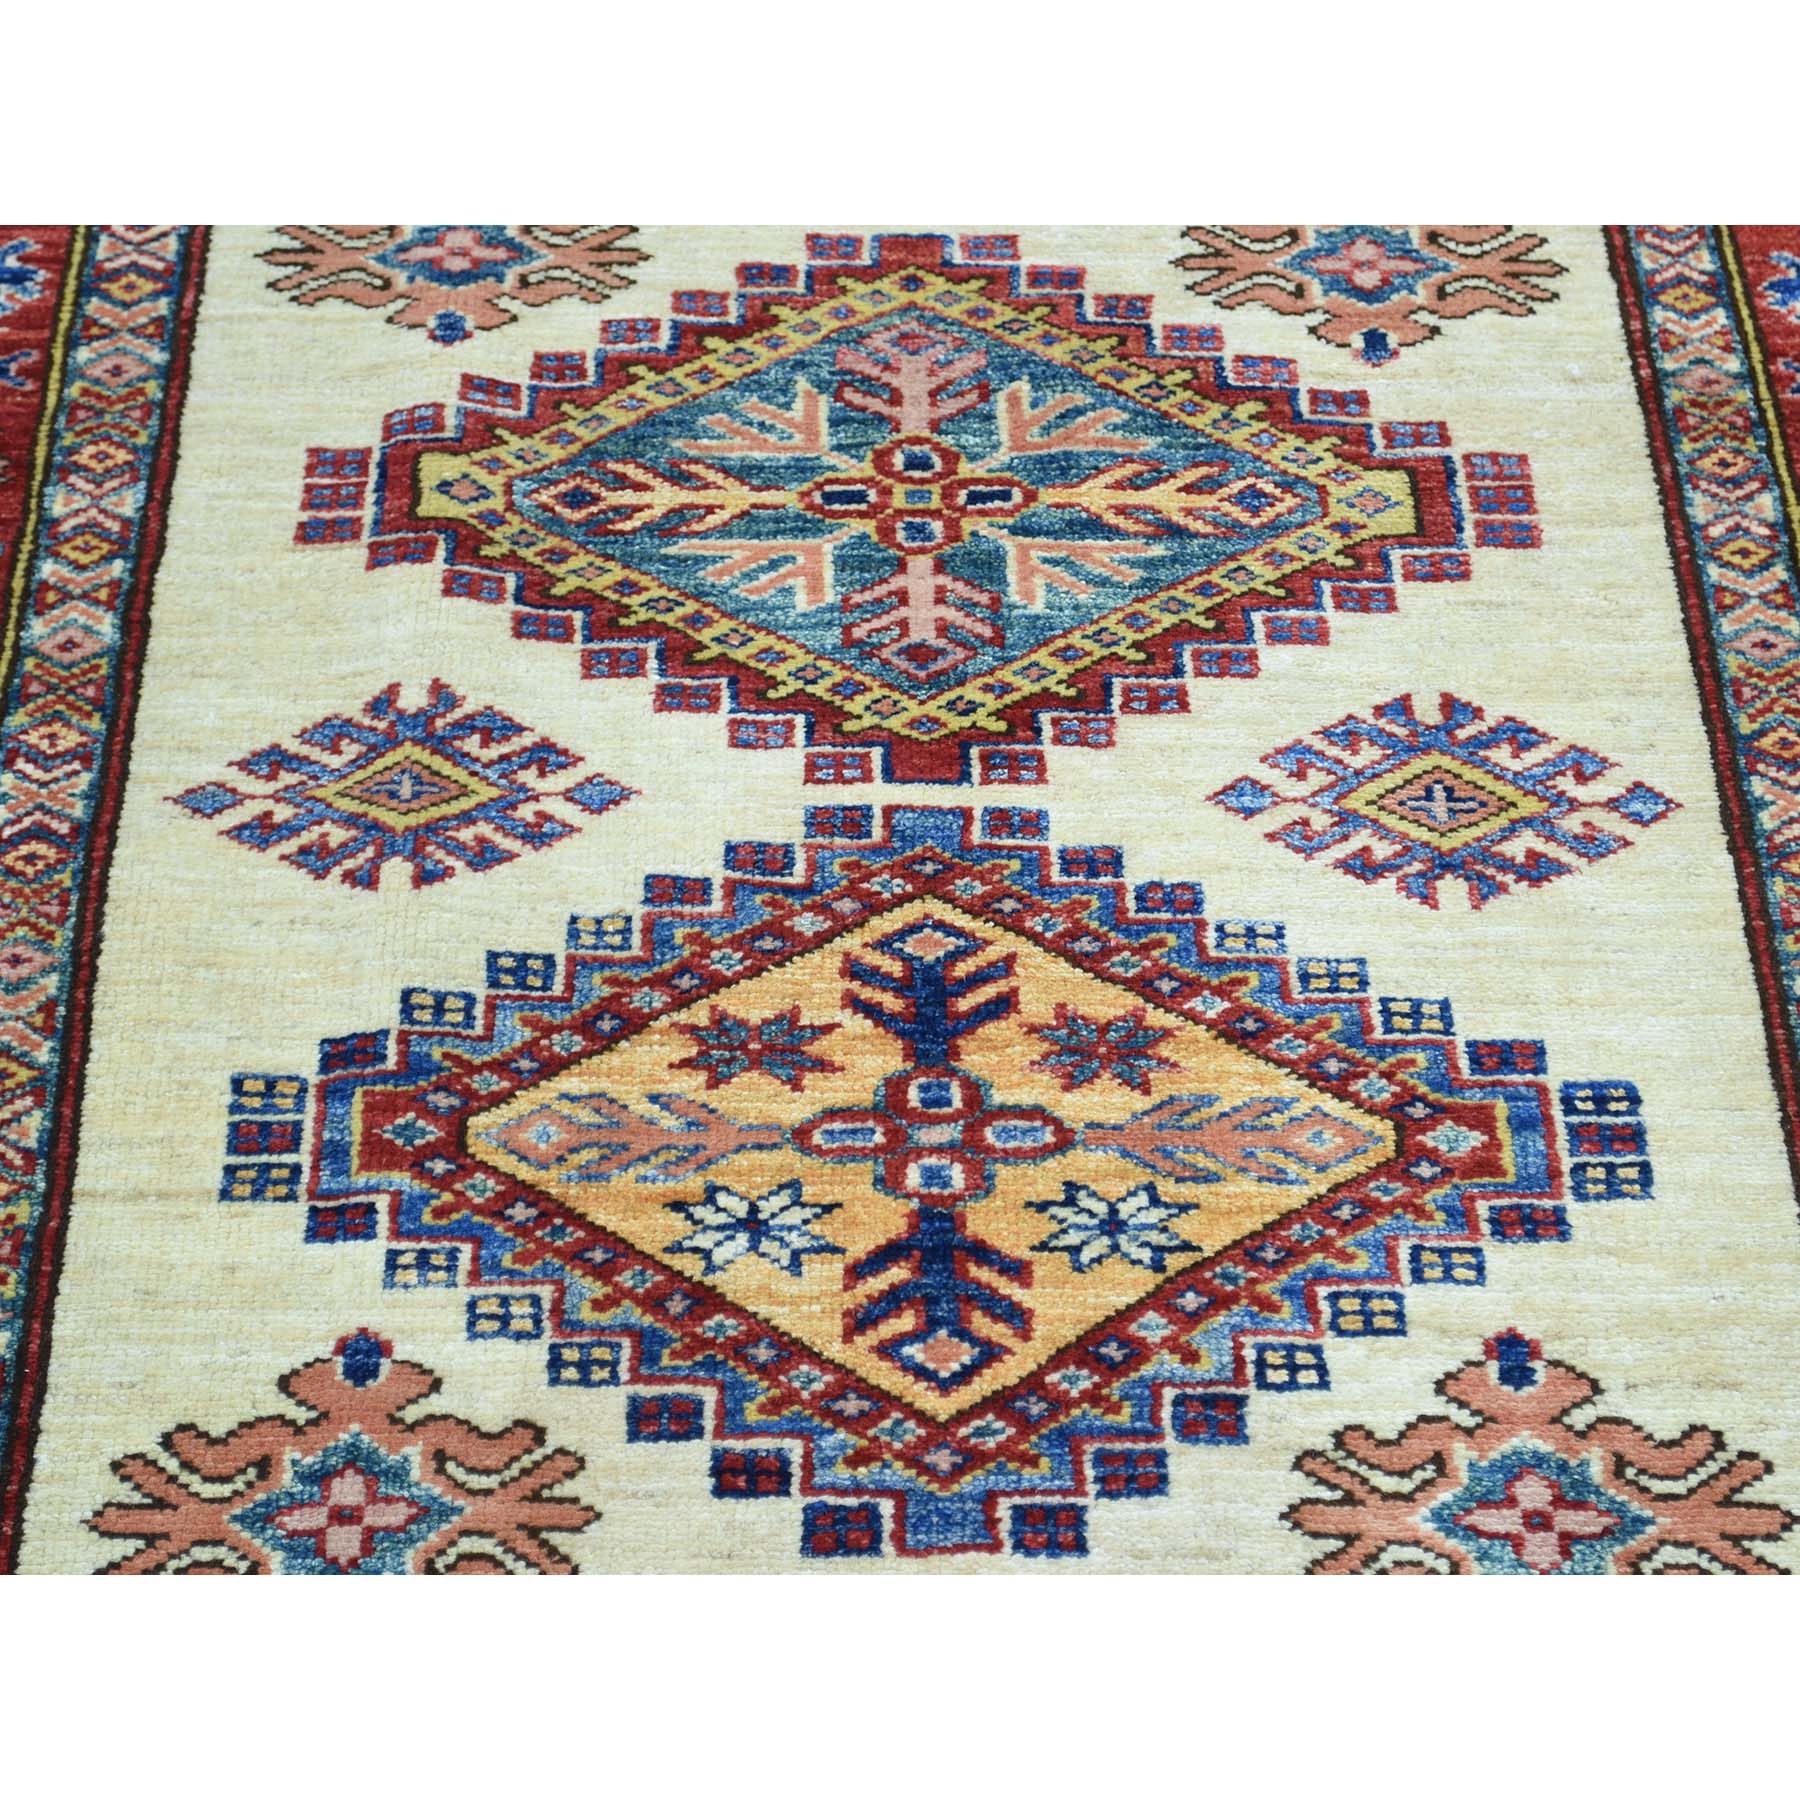 3-3 x5- Hand-Knotted Pure Wool Super Kazak Tribal Design Oriental Rug 